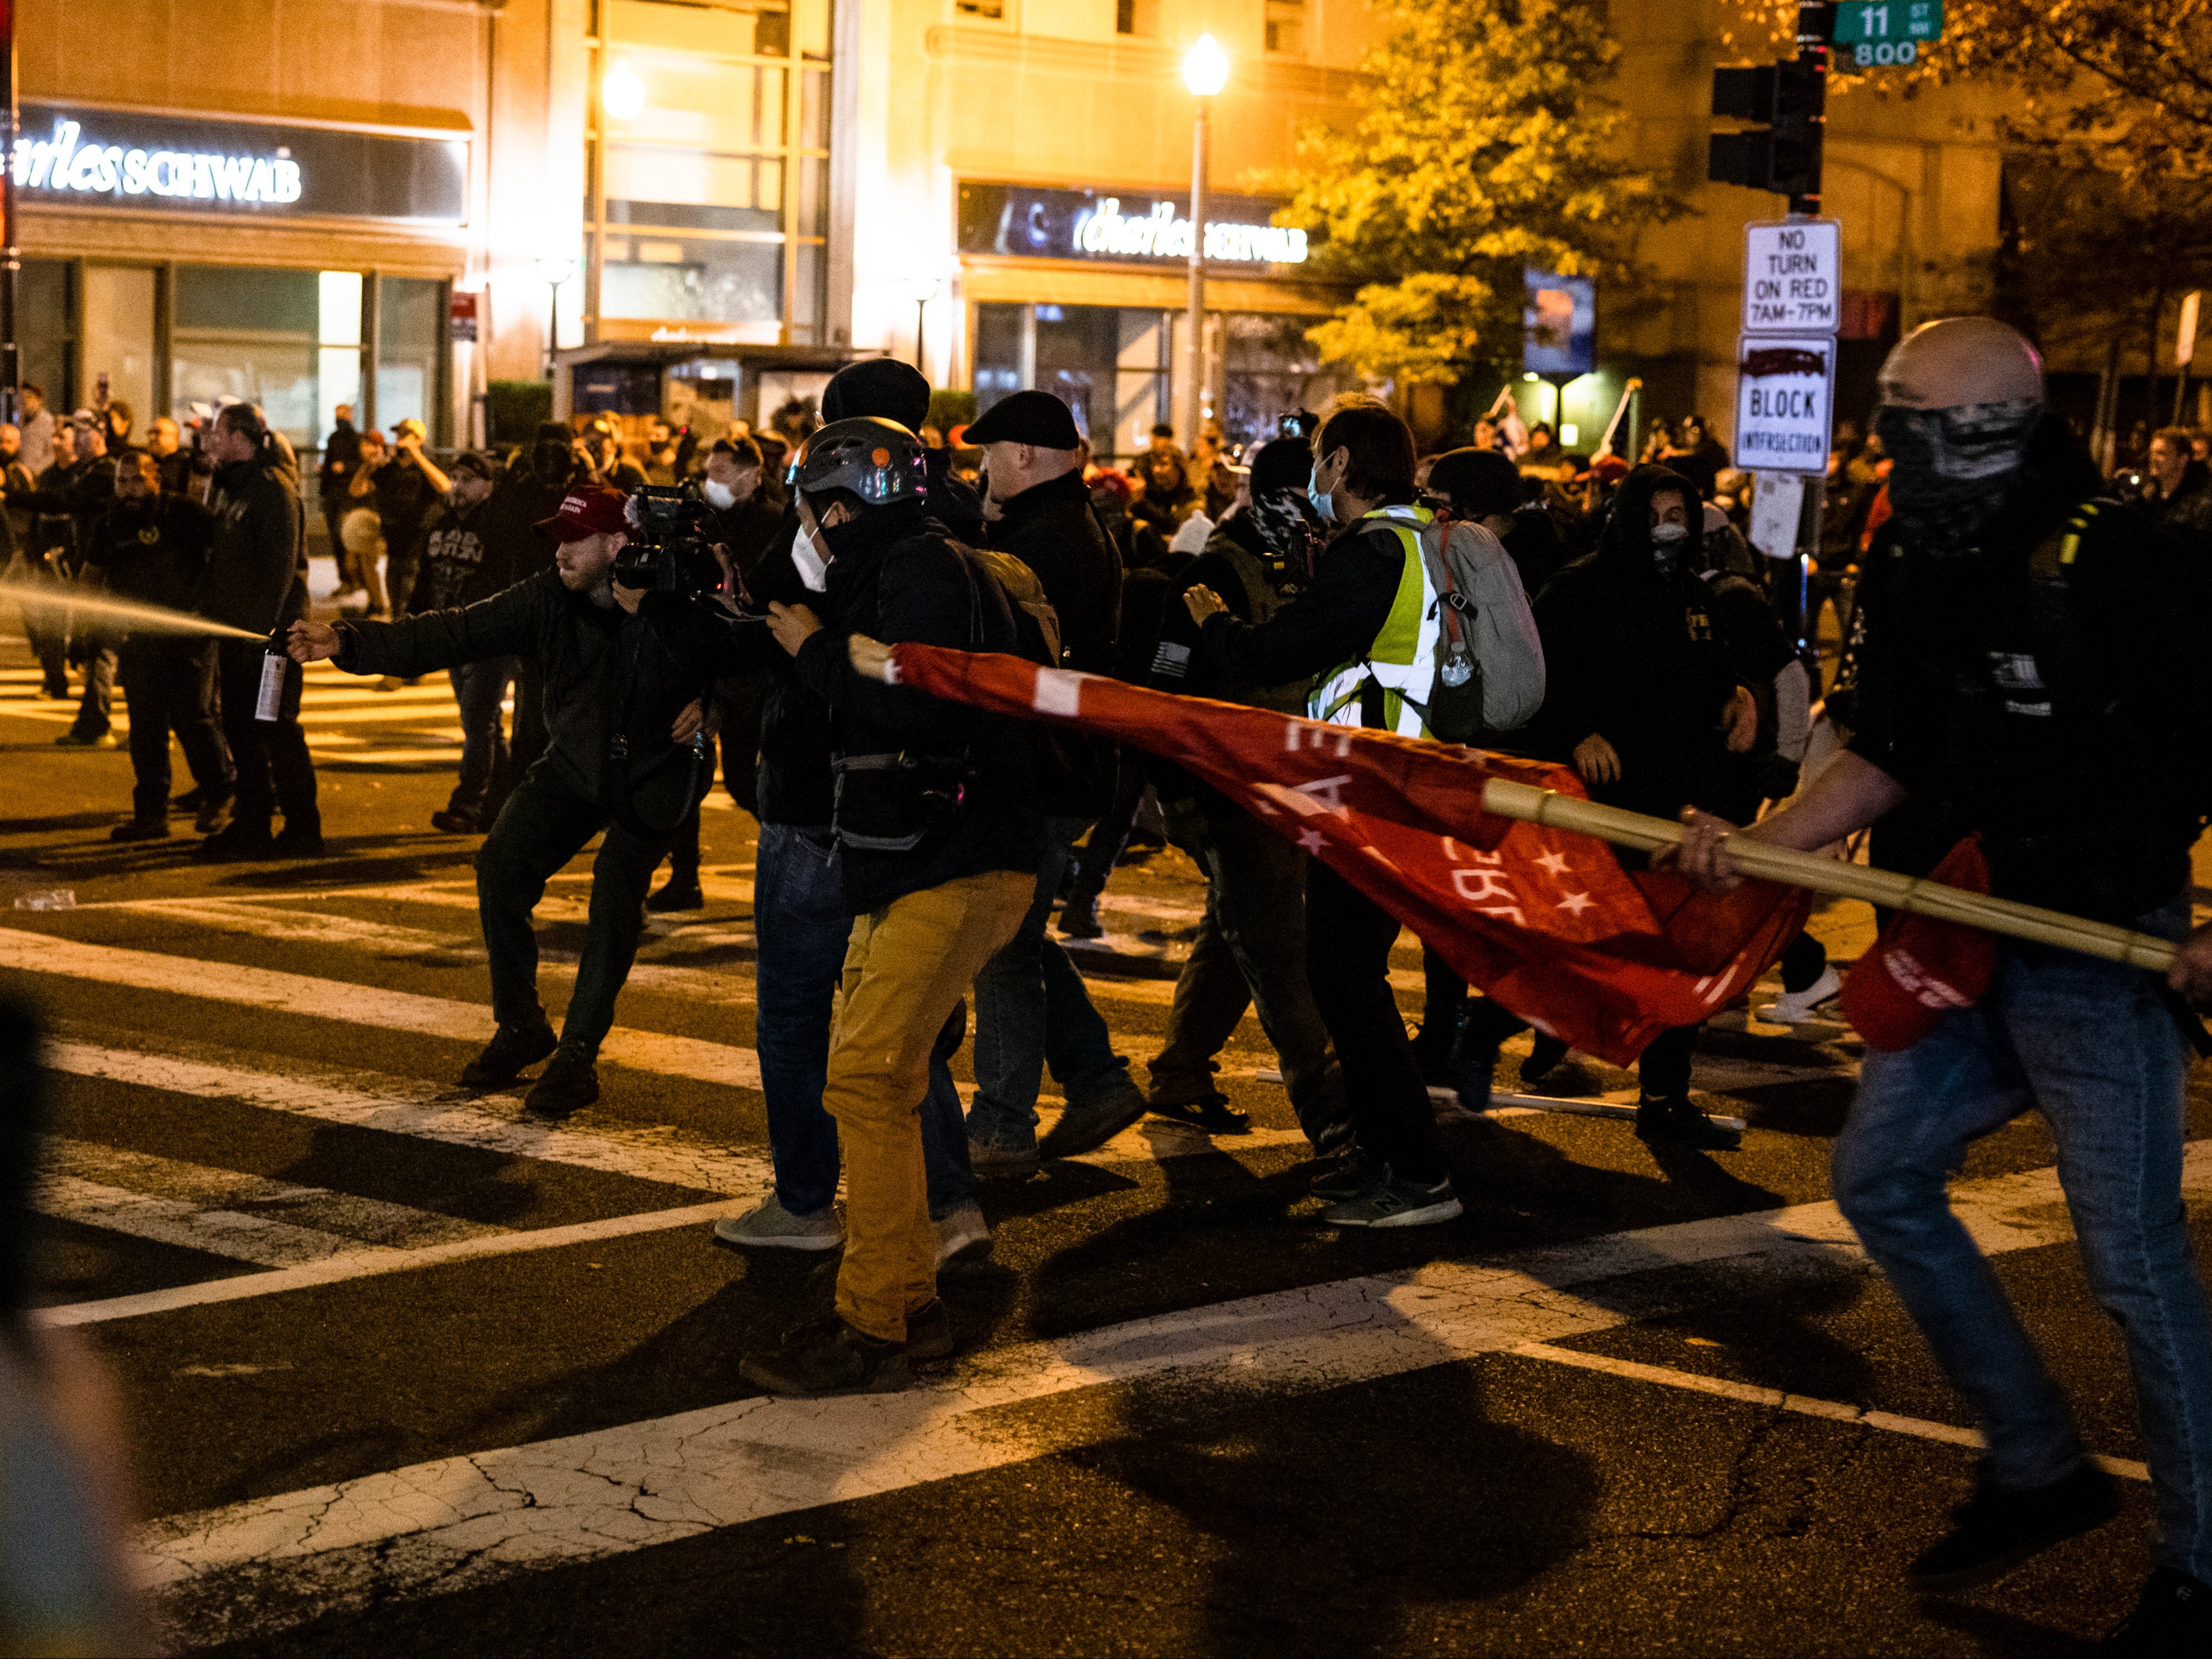 File image: Members of Antifa and Proud Boys clash in Washington, DC in November